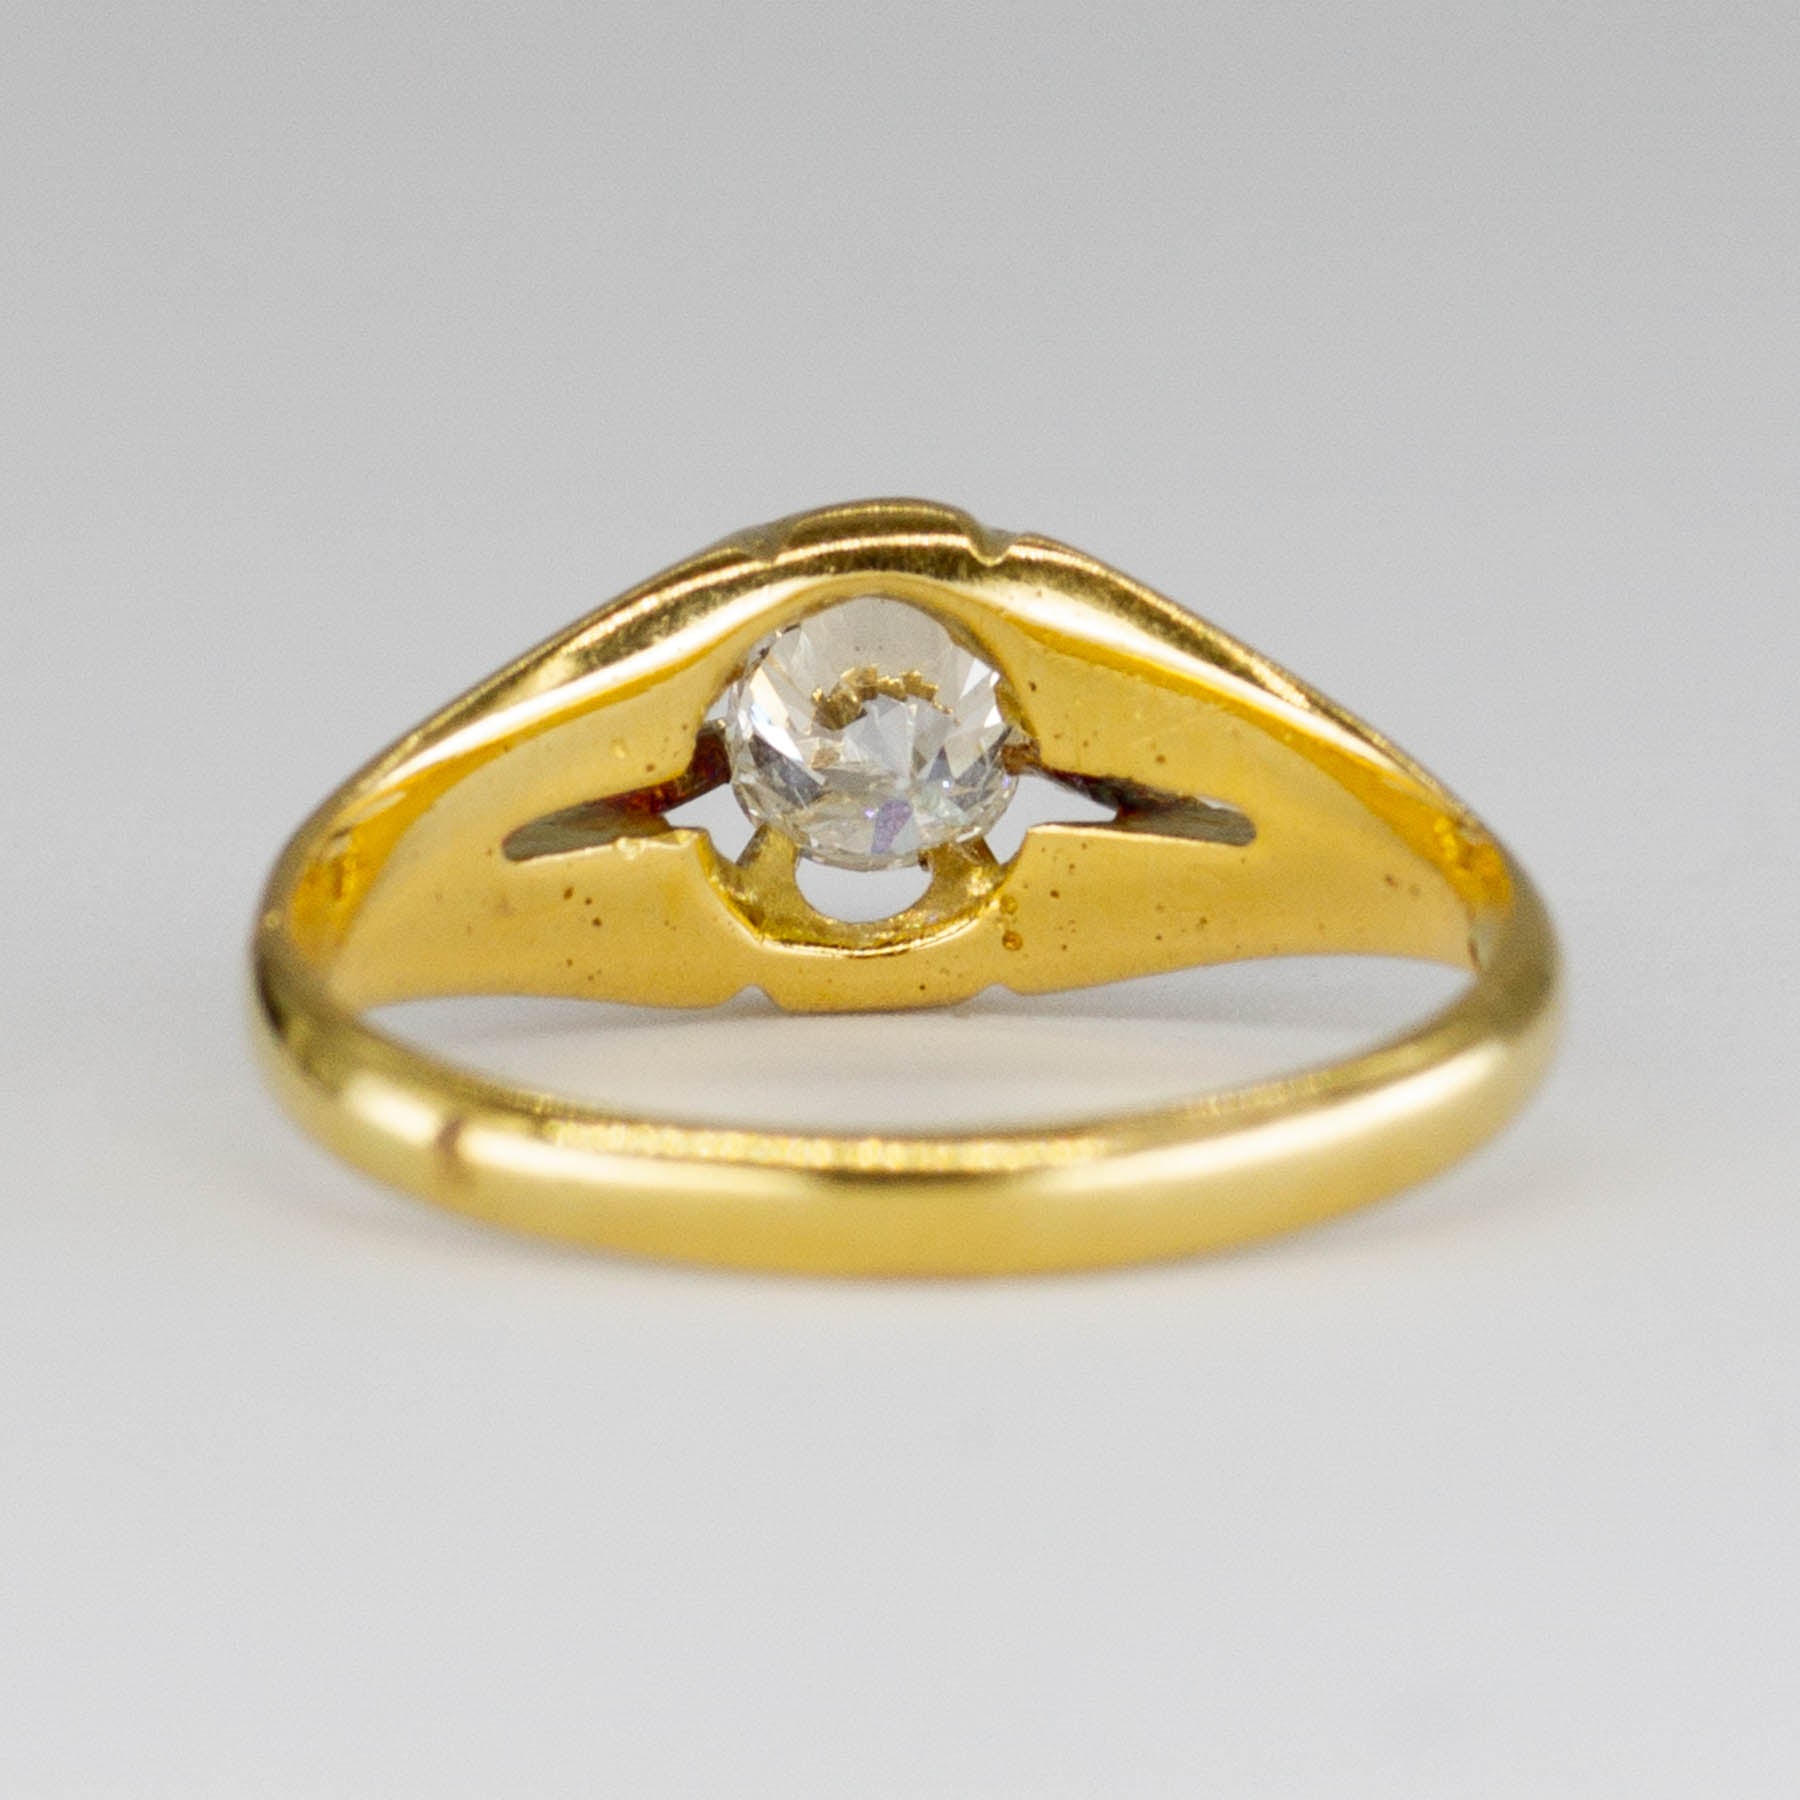 Old Mine Cut Diamond Ring | 0.37ct | SZ 4.75 |